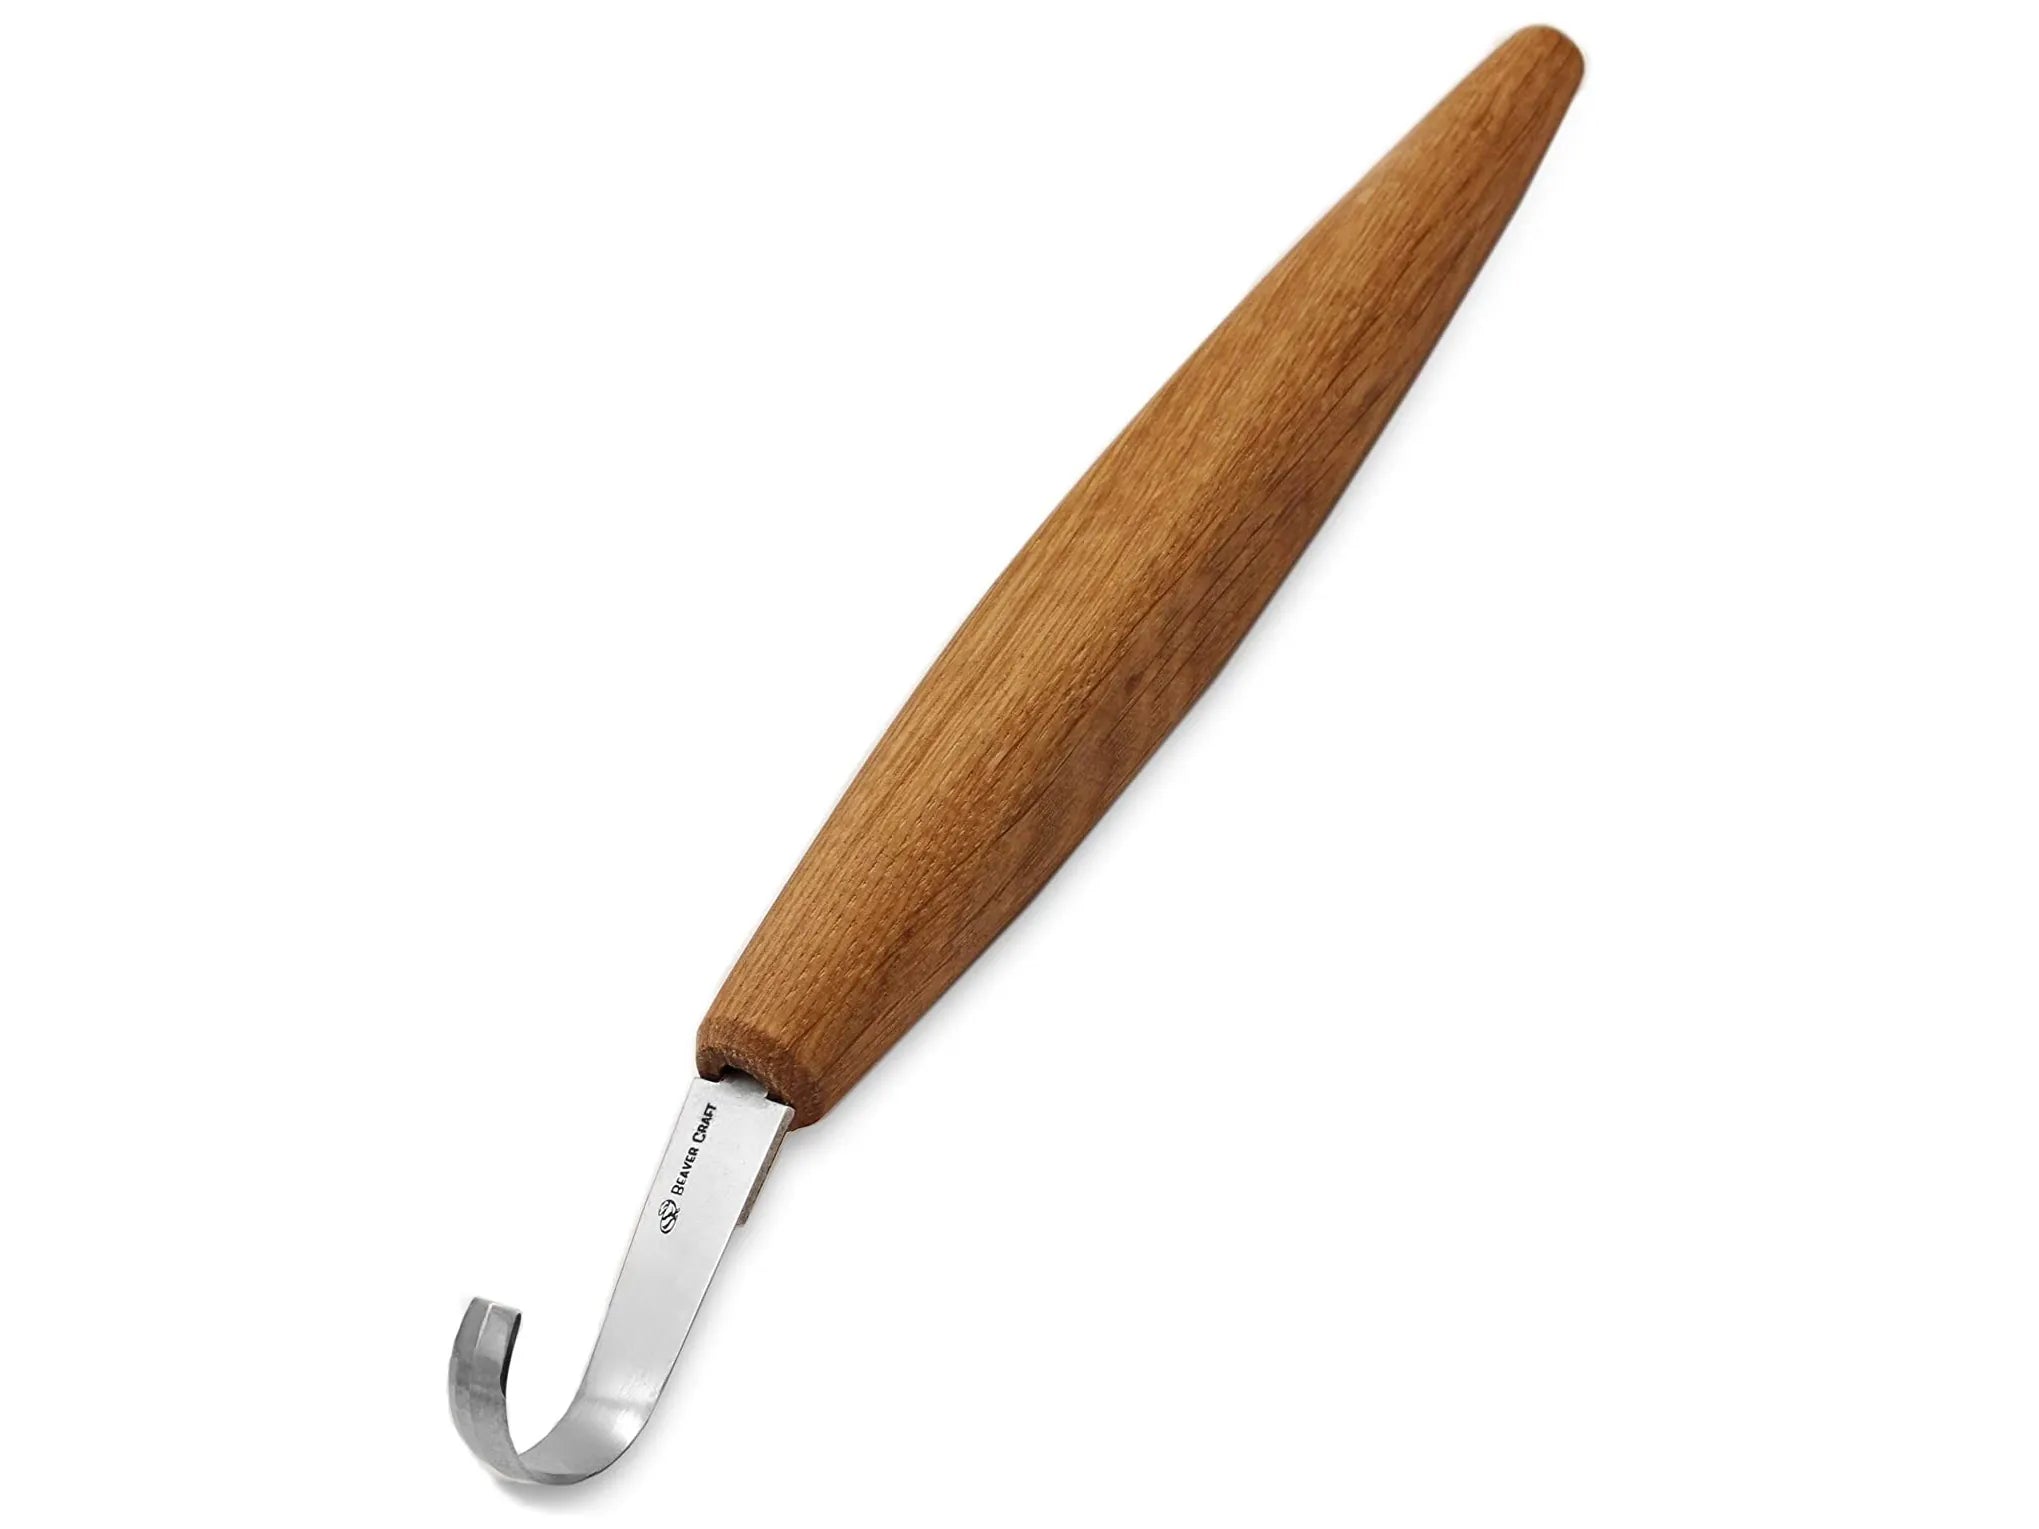 Buy big roughing knife carving cutting knife online - BeaverCraft